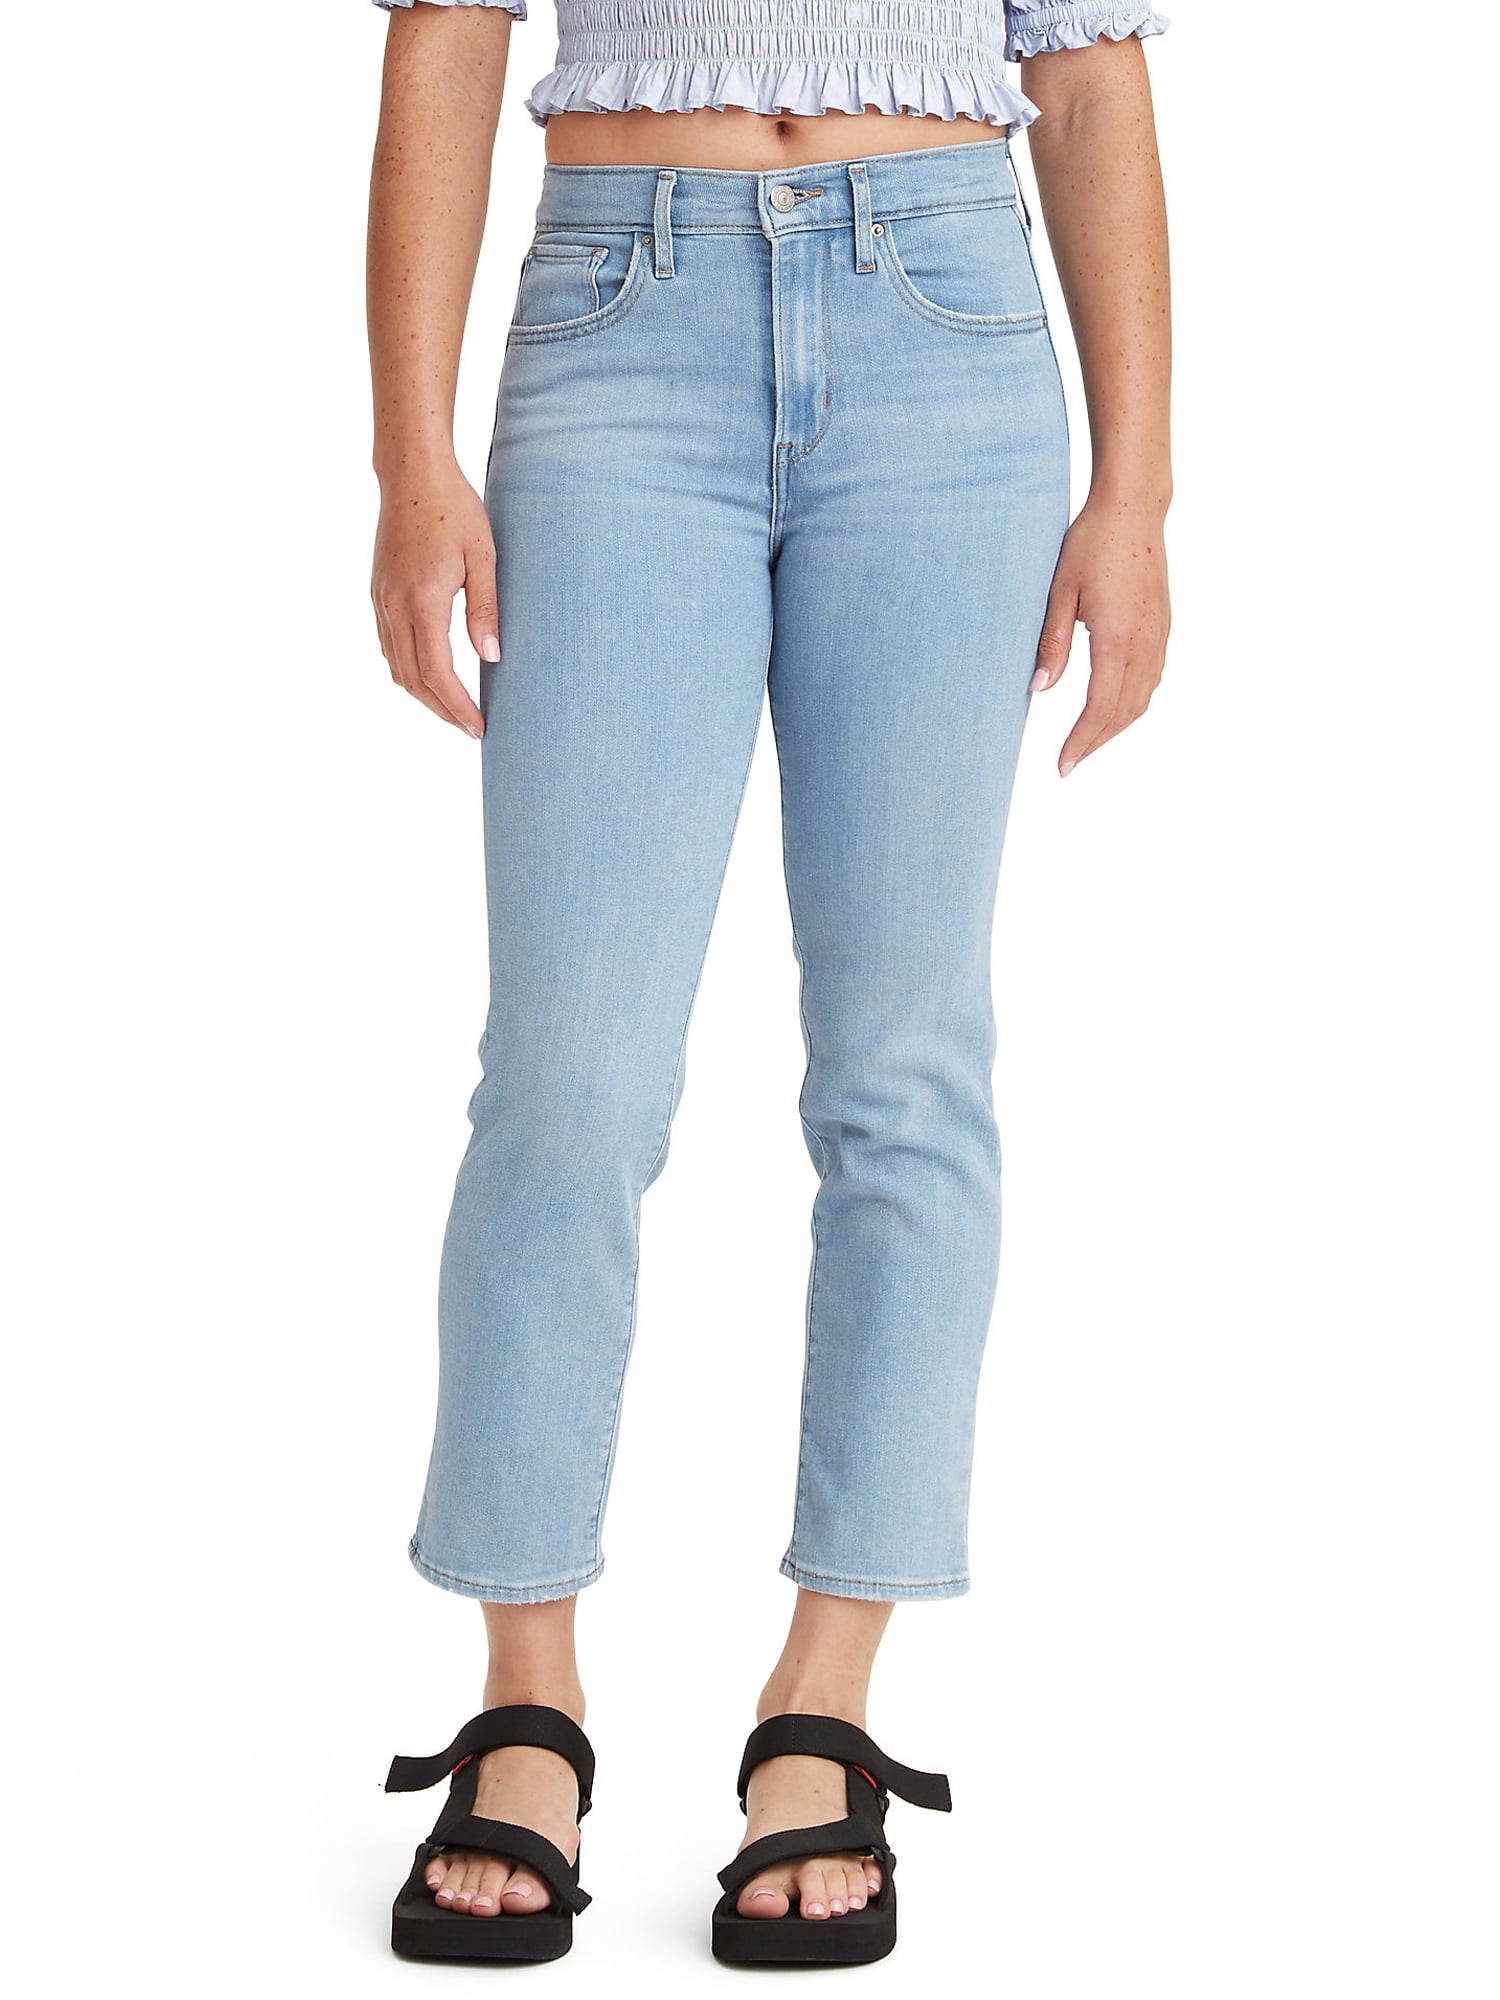 Levi's Original Women's 724 High-Rise Straight Crop Jeans 